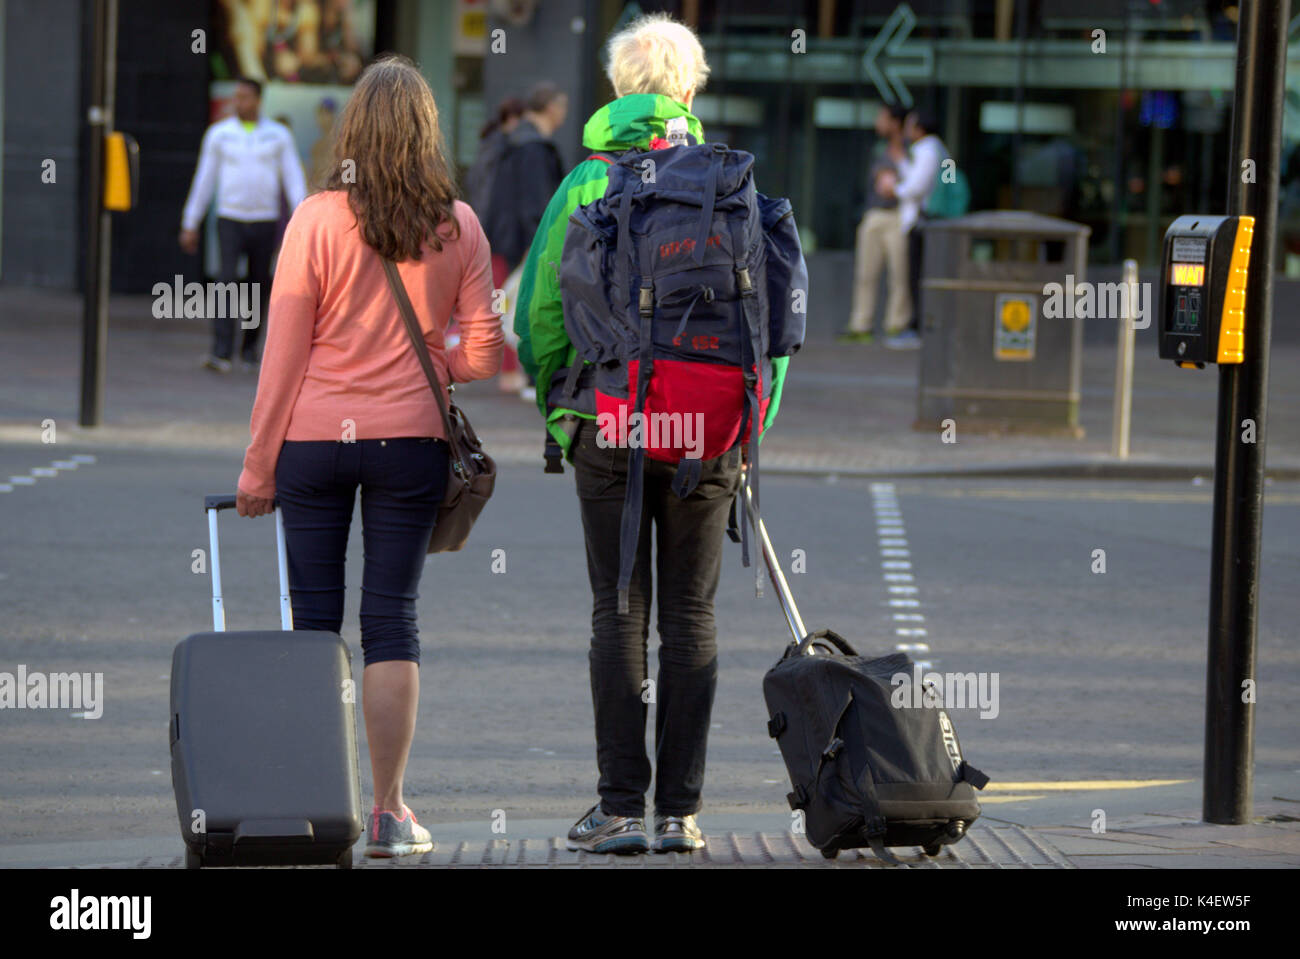 Glasgow street scene turistas americanos cruzando sapo en el semáforo con carro de casos y mochila Foto de stock